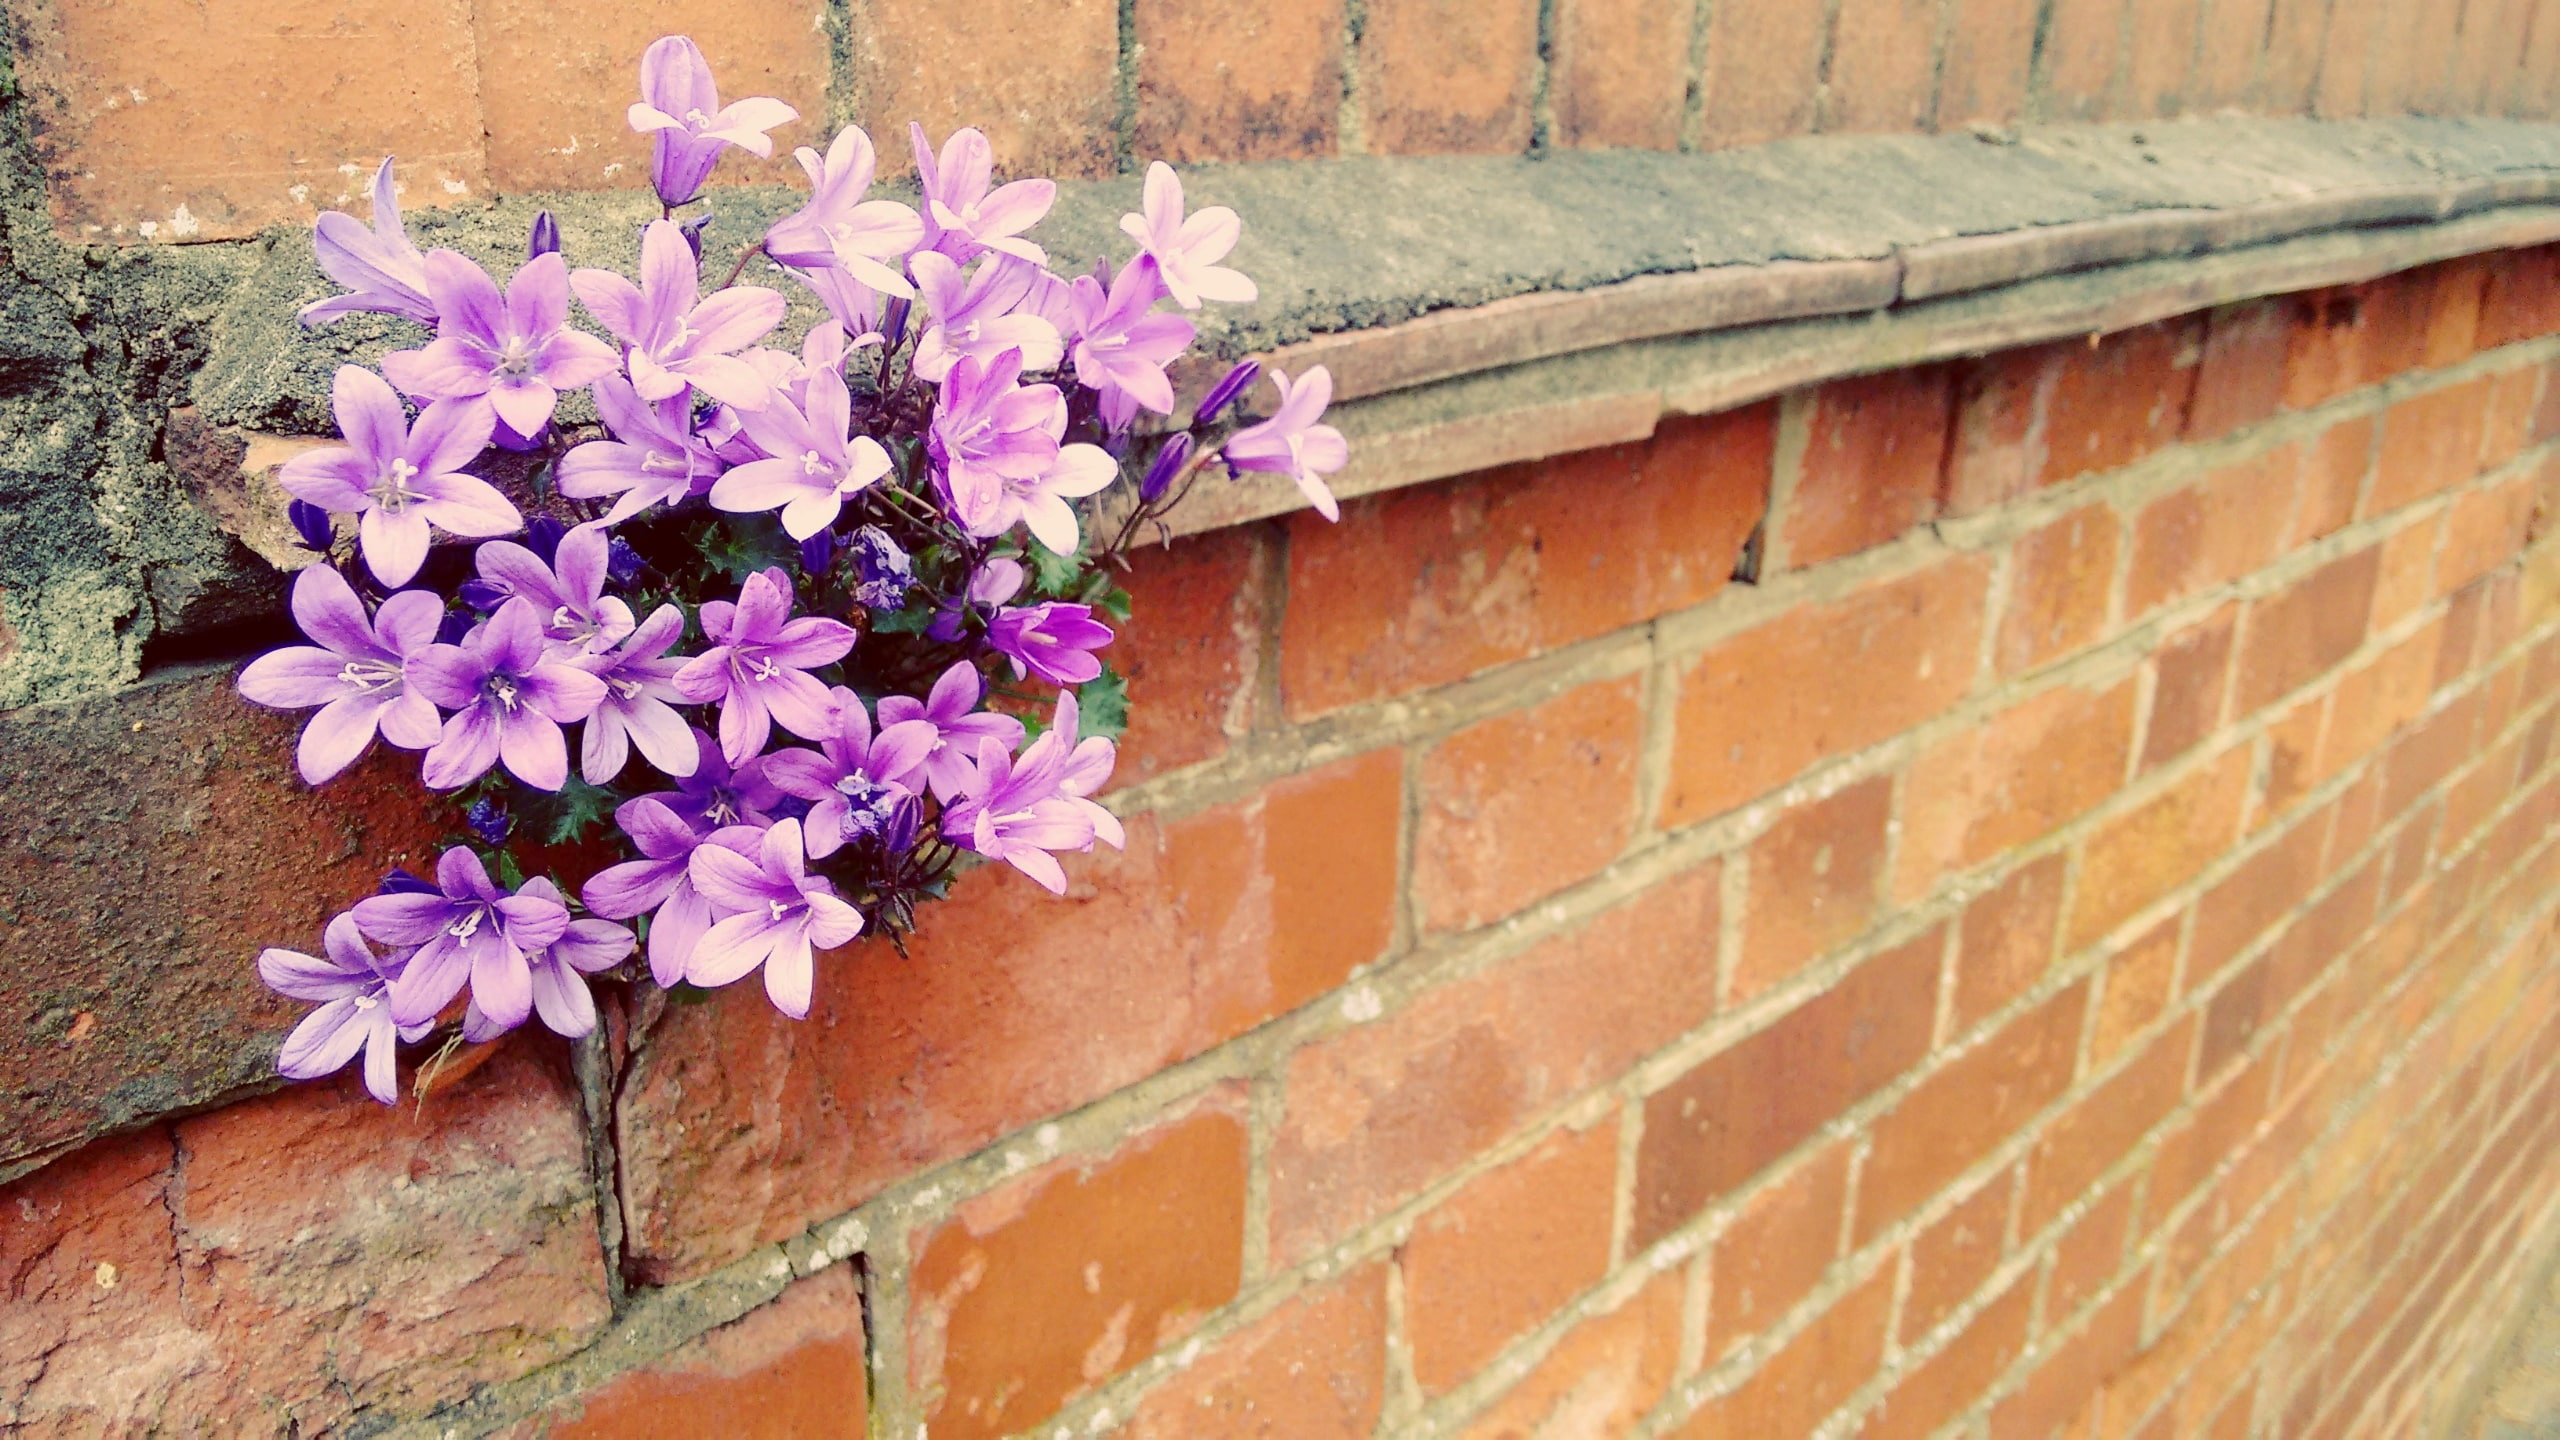 wall, bricks, flowers, plants, flowering plant, brick wall